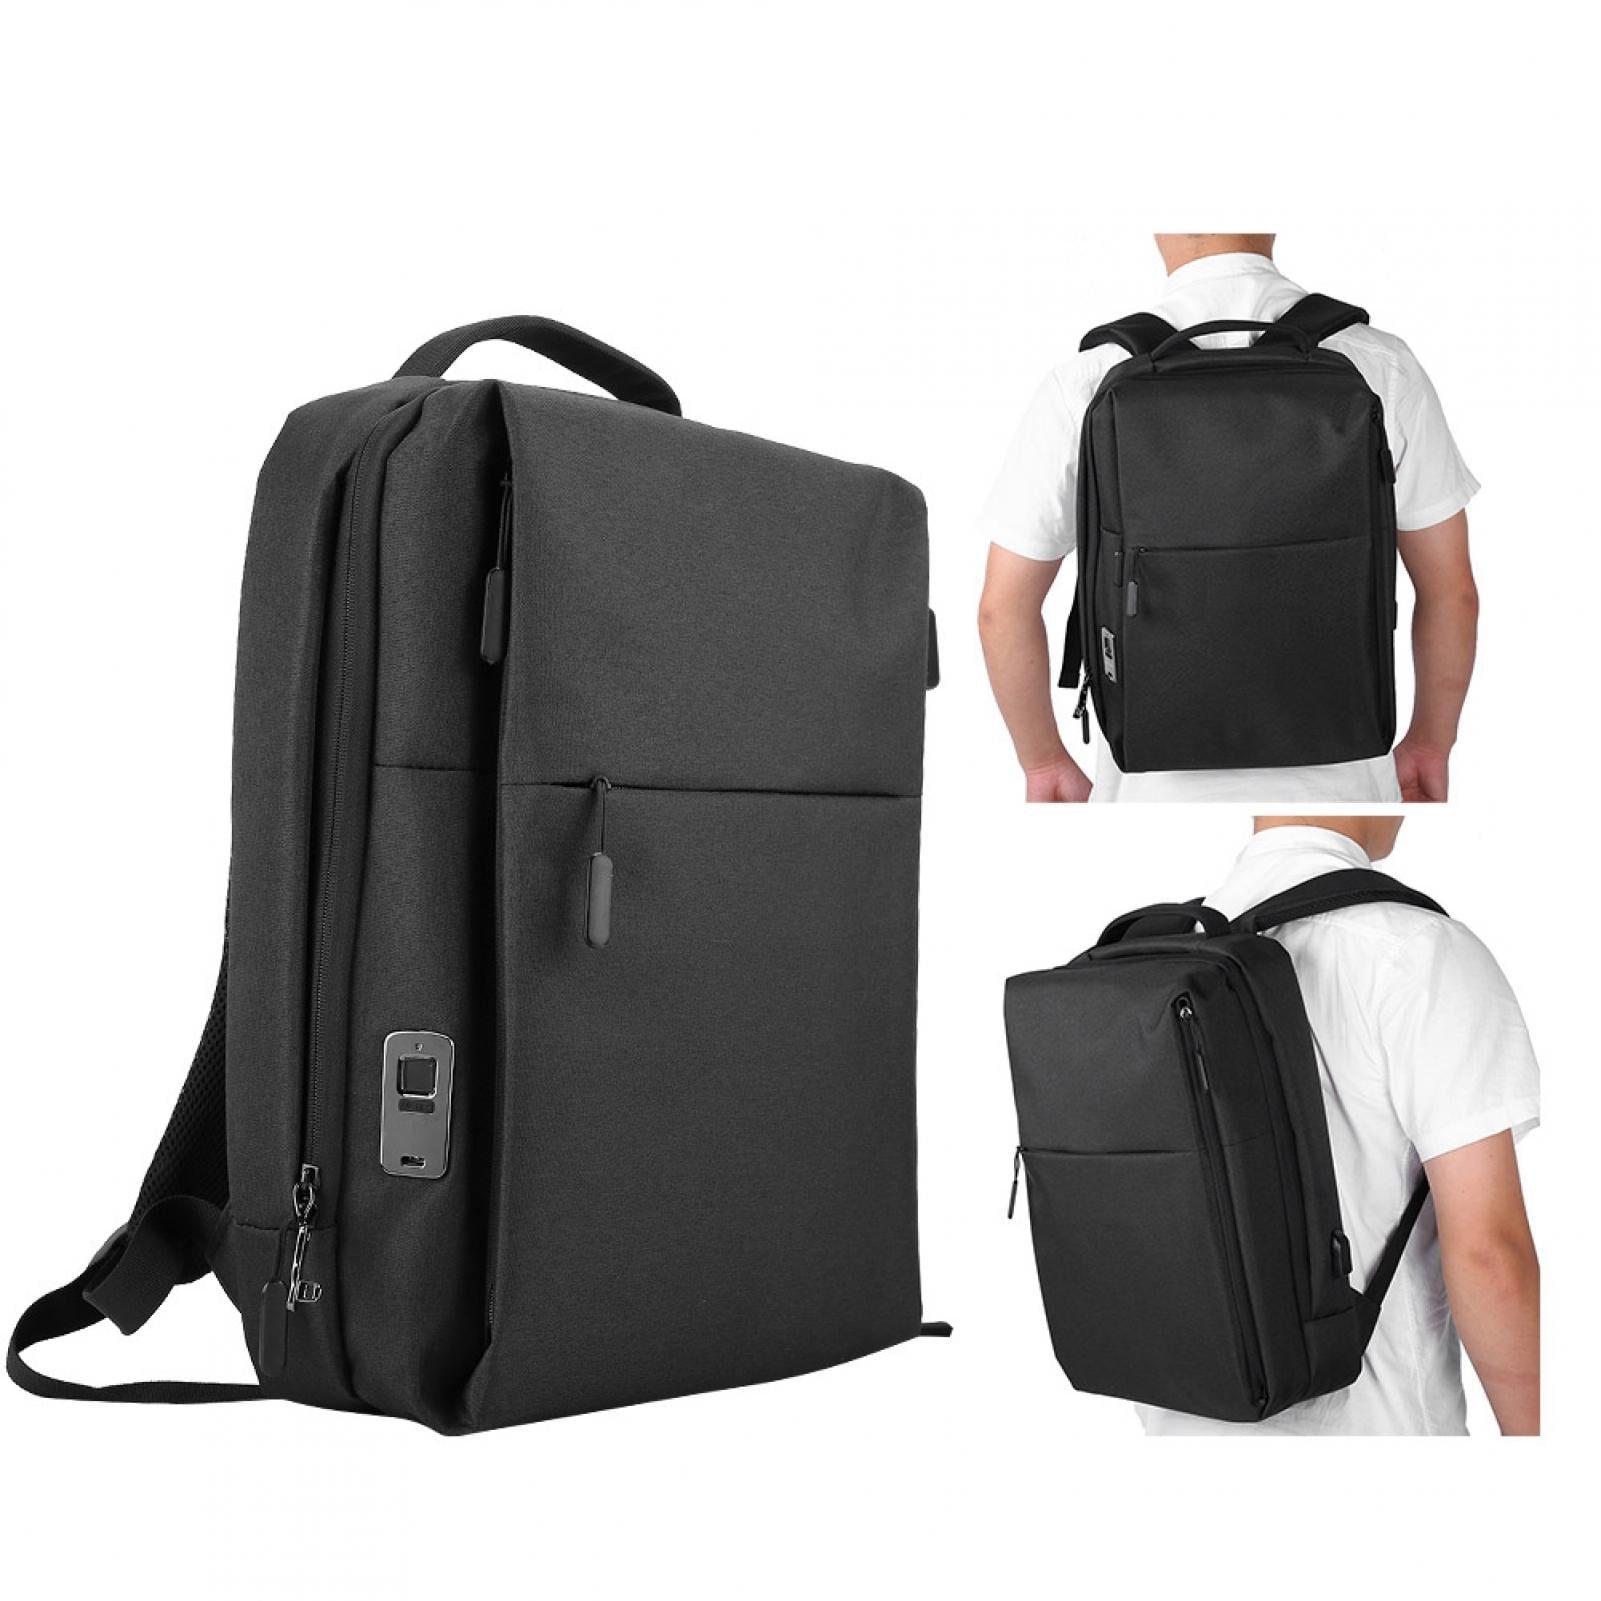 RRH Laptop Backpack Sports Backpack Men's Backpack Work Bag Lightweight Laptop Bag with USB Charging Port Color : Gray Fits 15.6 Inch Laptop Anti Theft Business Backpack